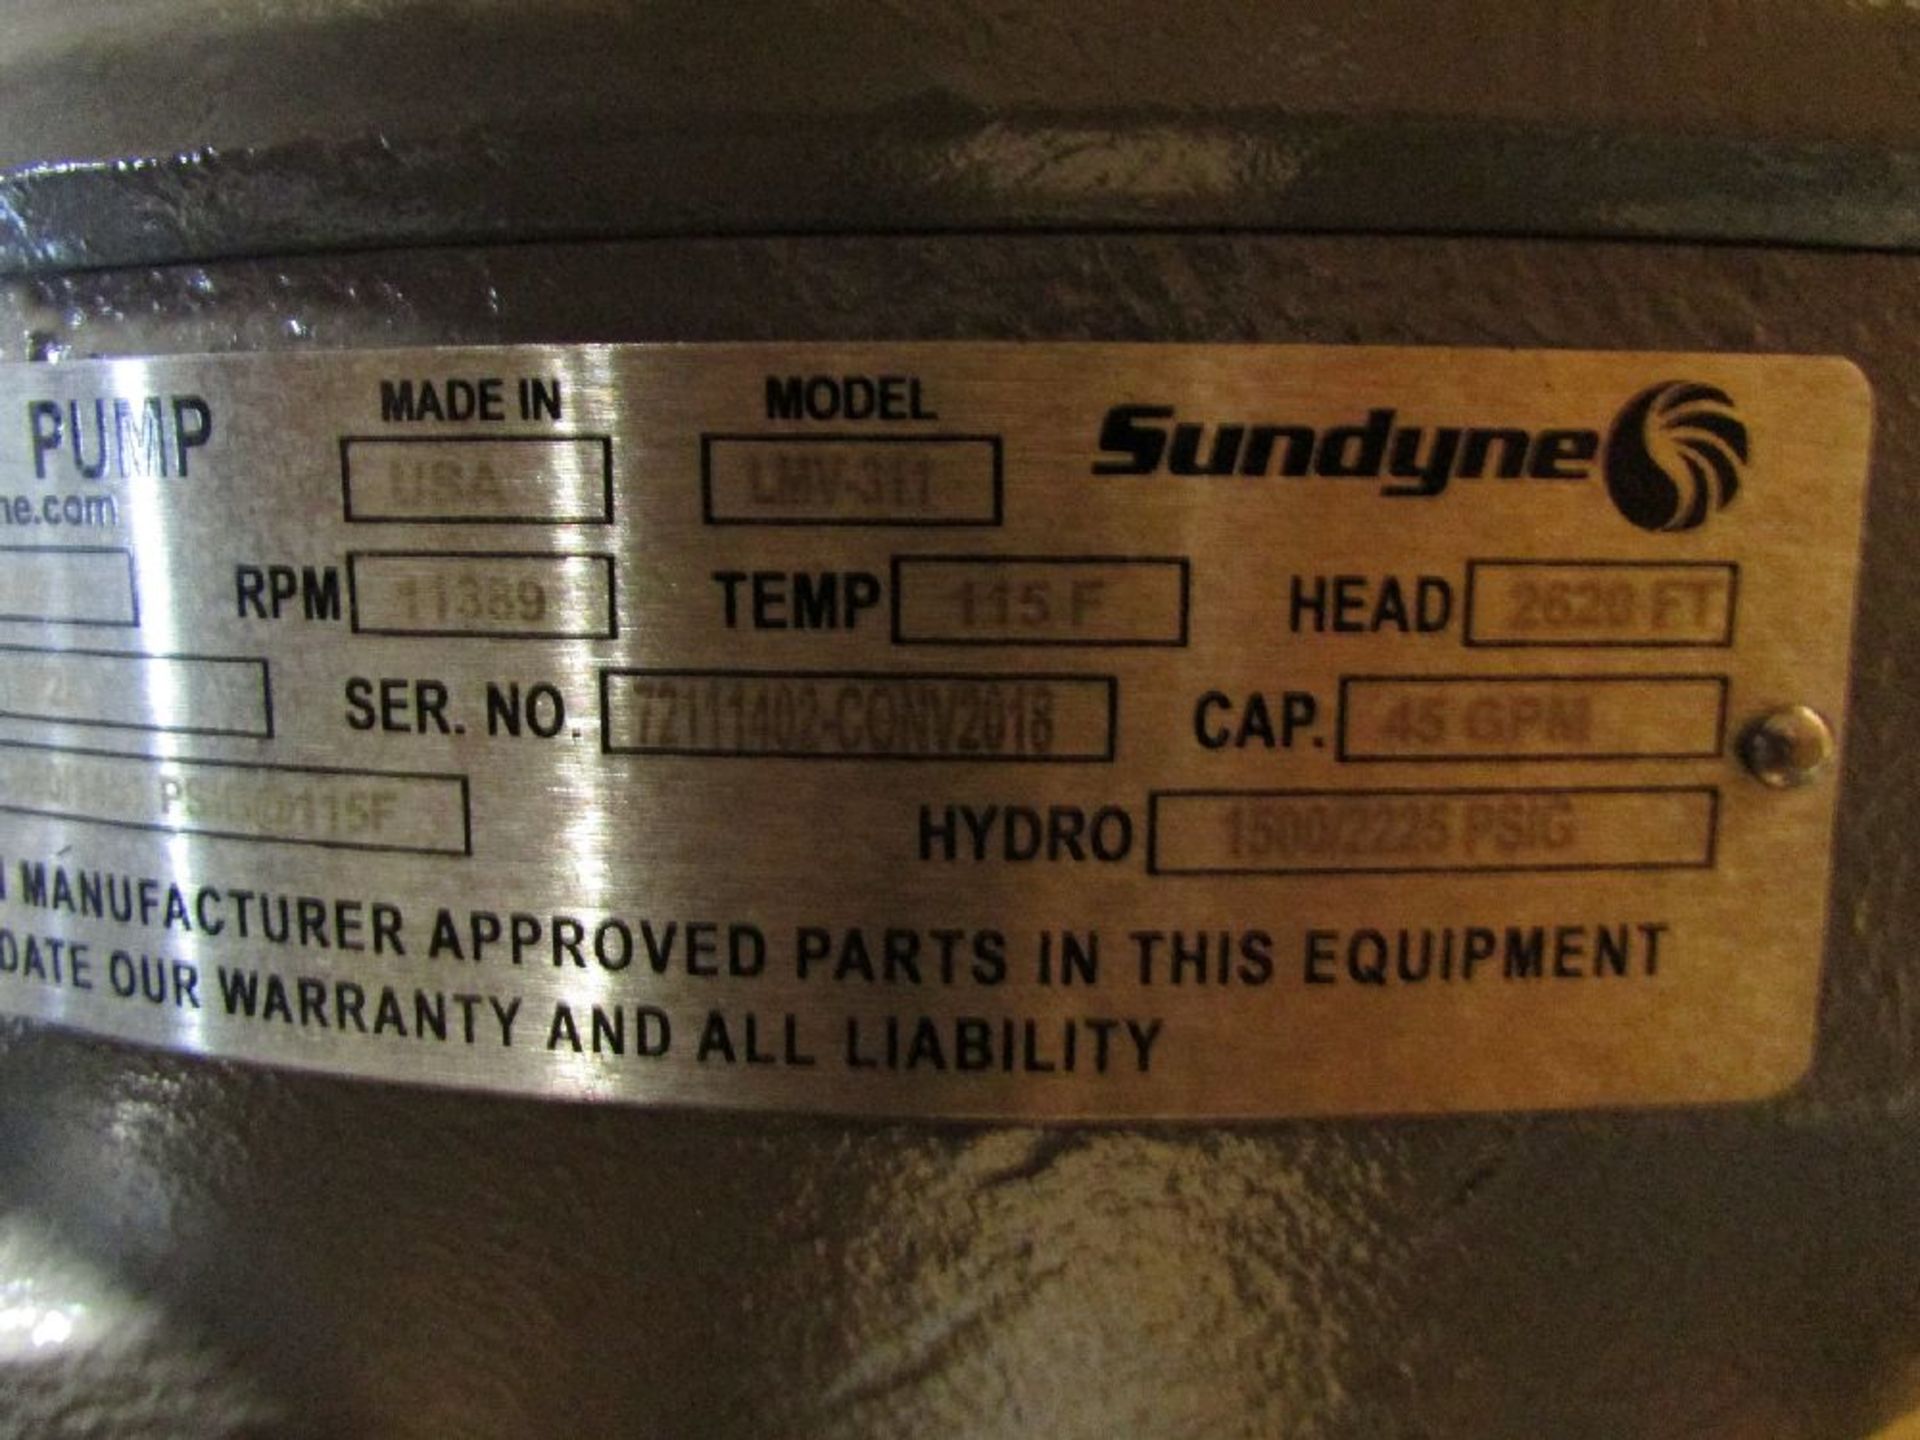 Sundyne Model LMV311 45 GPM Centrifugal Pump - Image 6 of 8